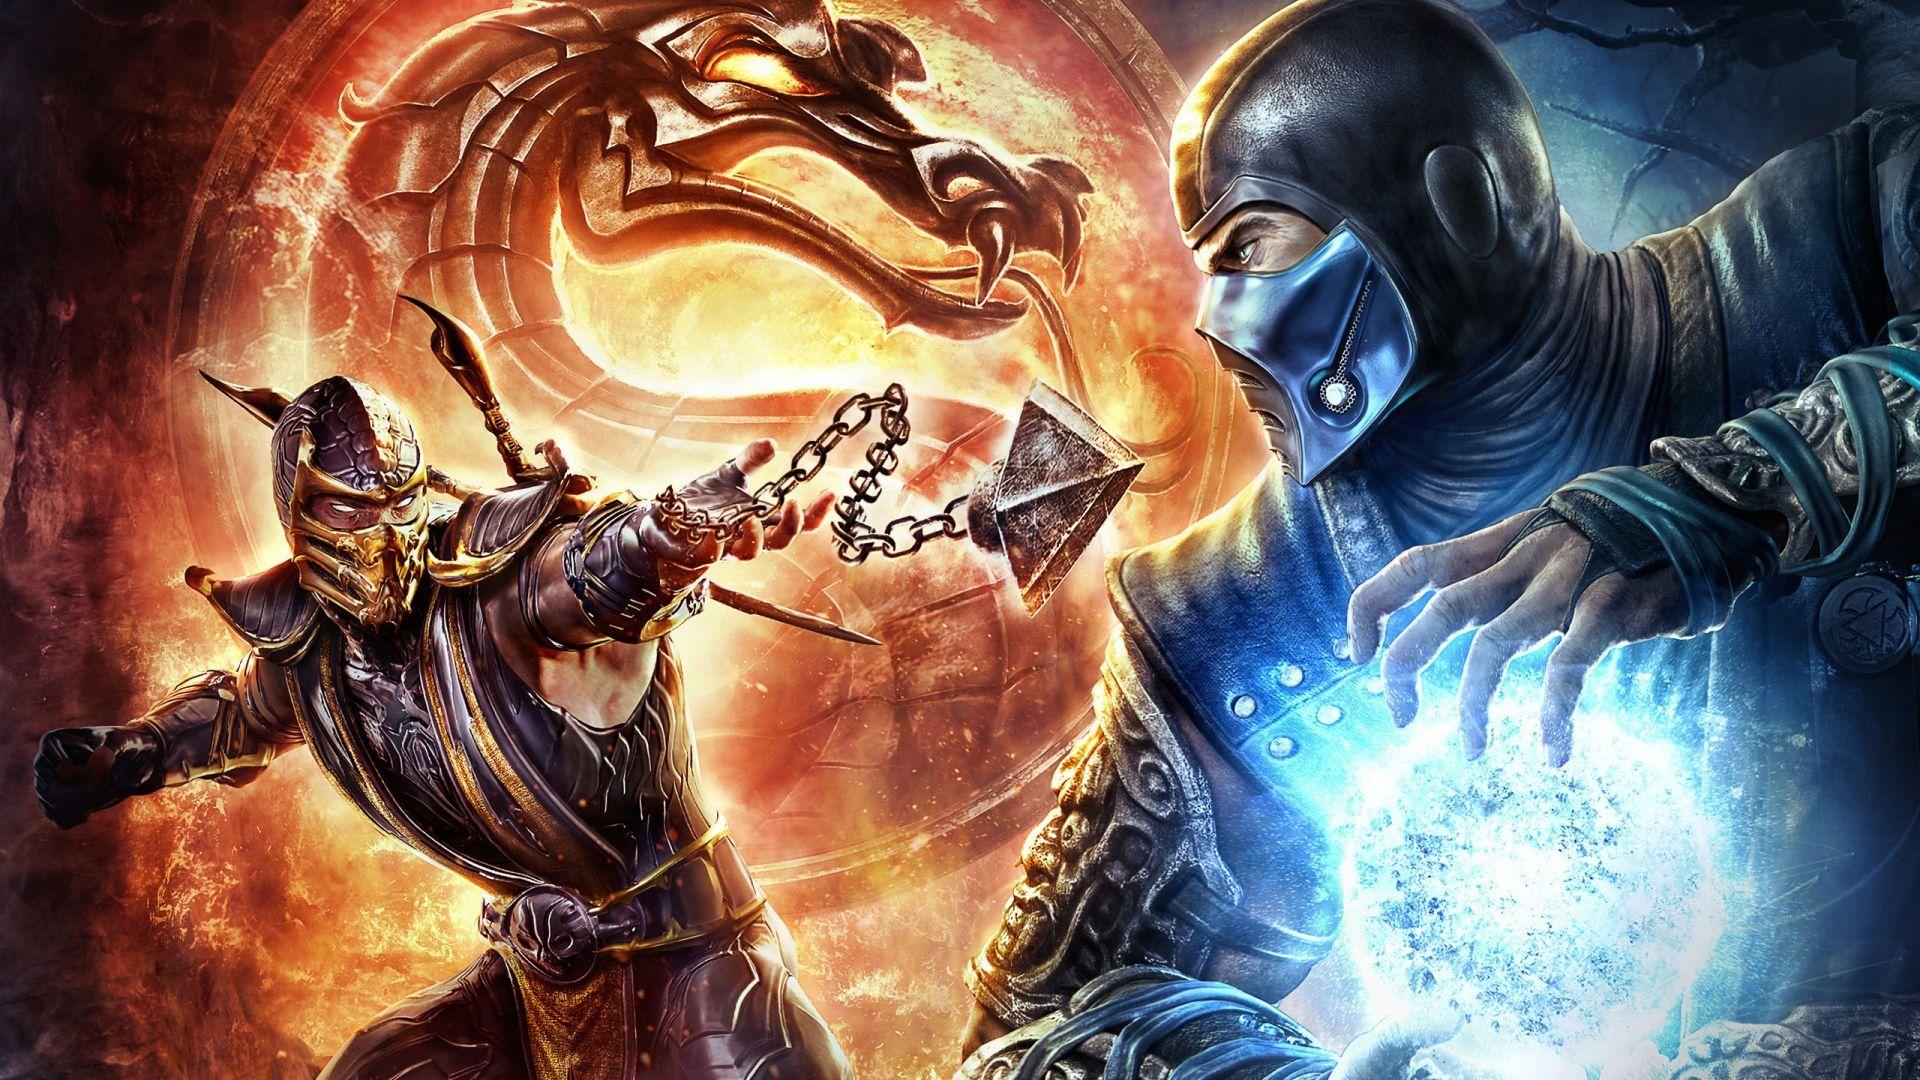 Mortal Kombat Scorpion Vs Sub Zero Wallpapers Top Free Mortal